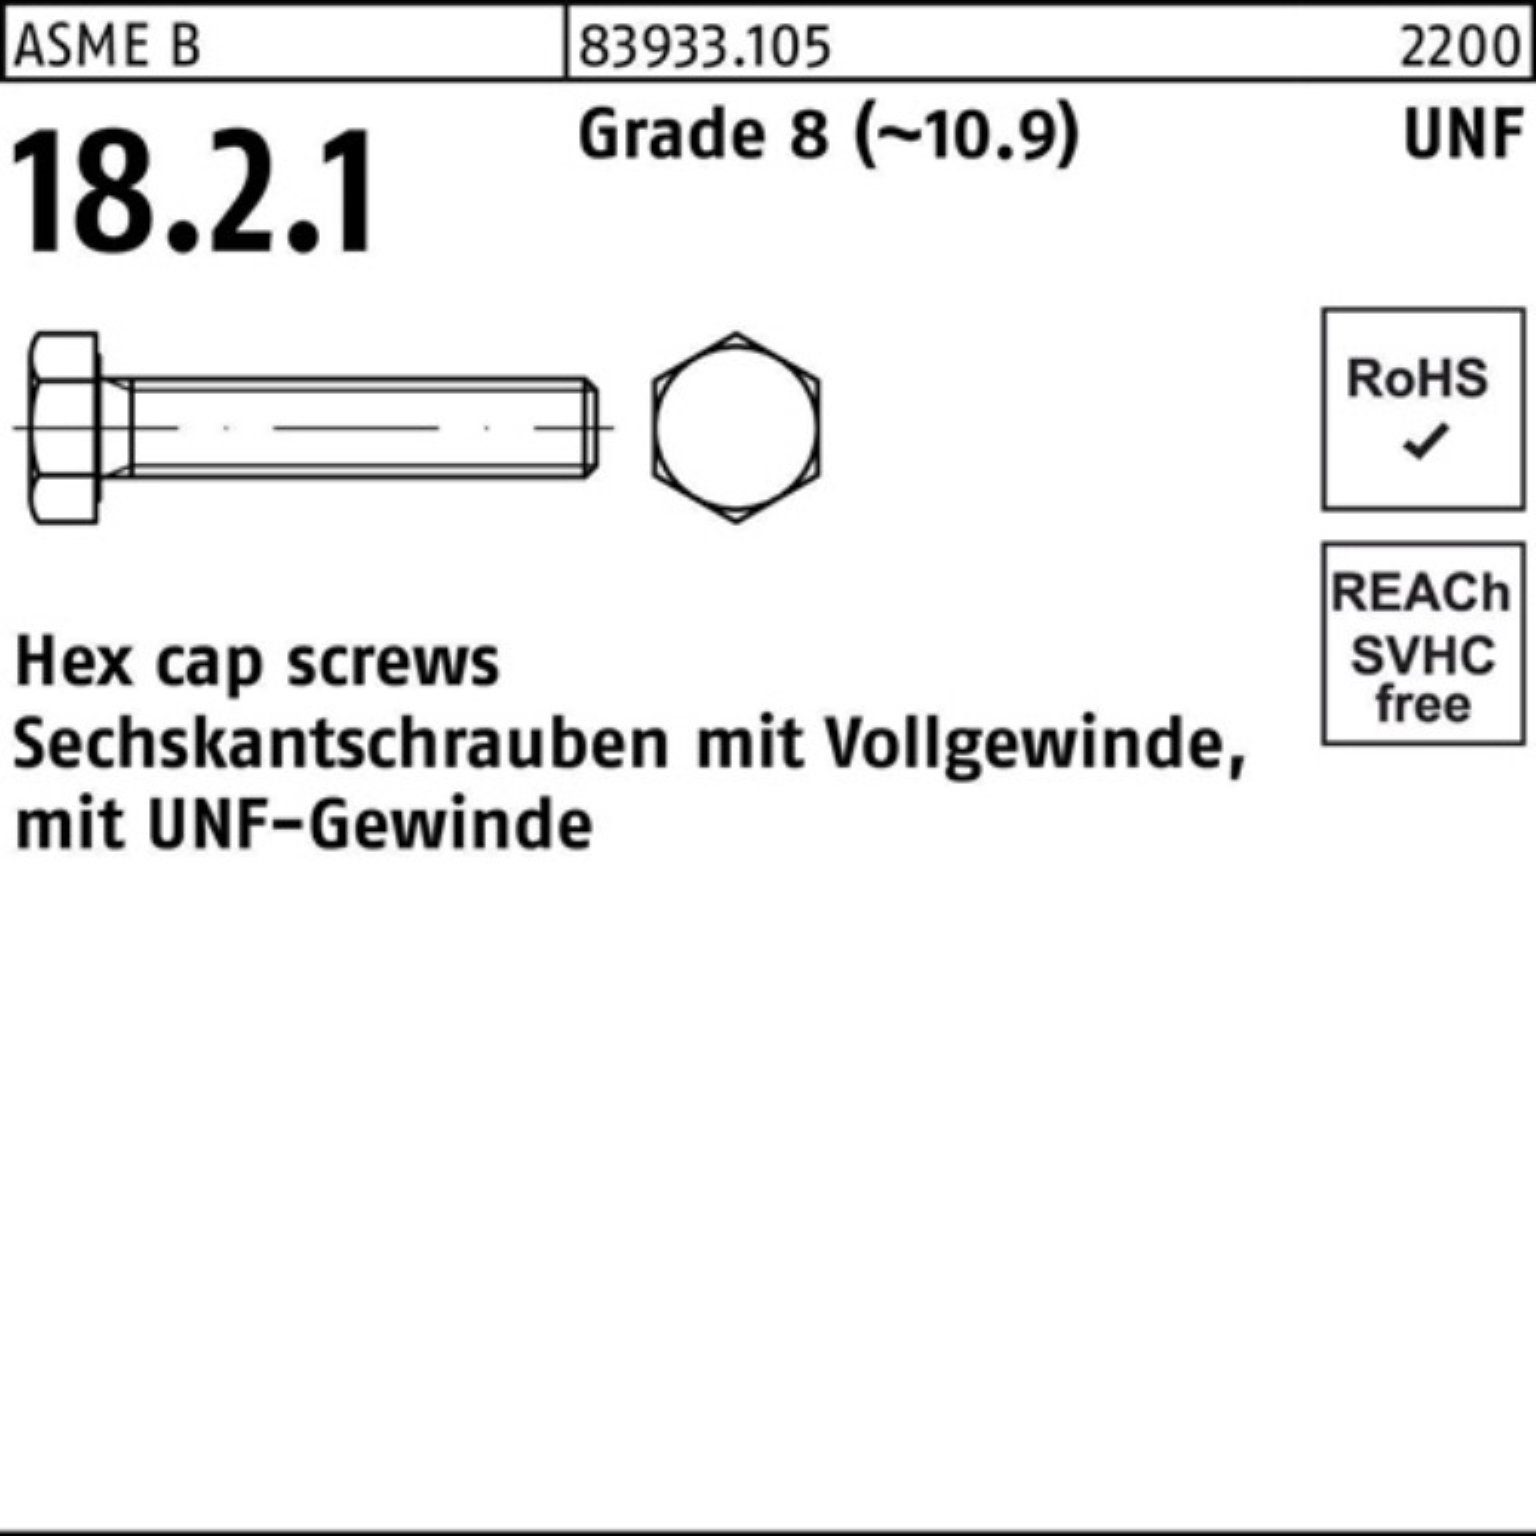 Reyher Sechskantschraube 100er Pack Sechskantschraube R 83933 UNF-Gewinde VG 3/8x 1 Grade 8 (1